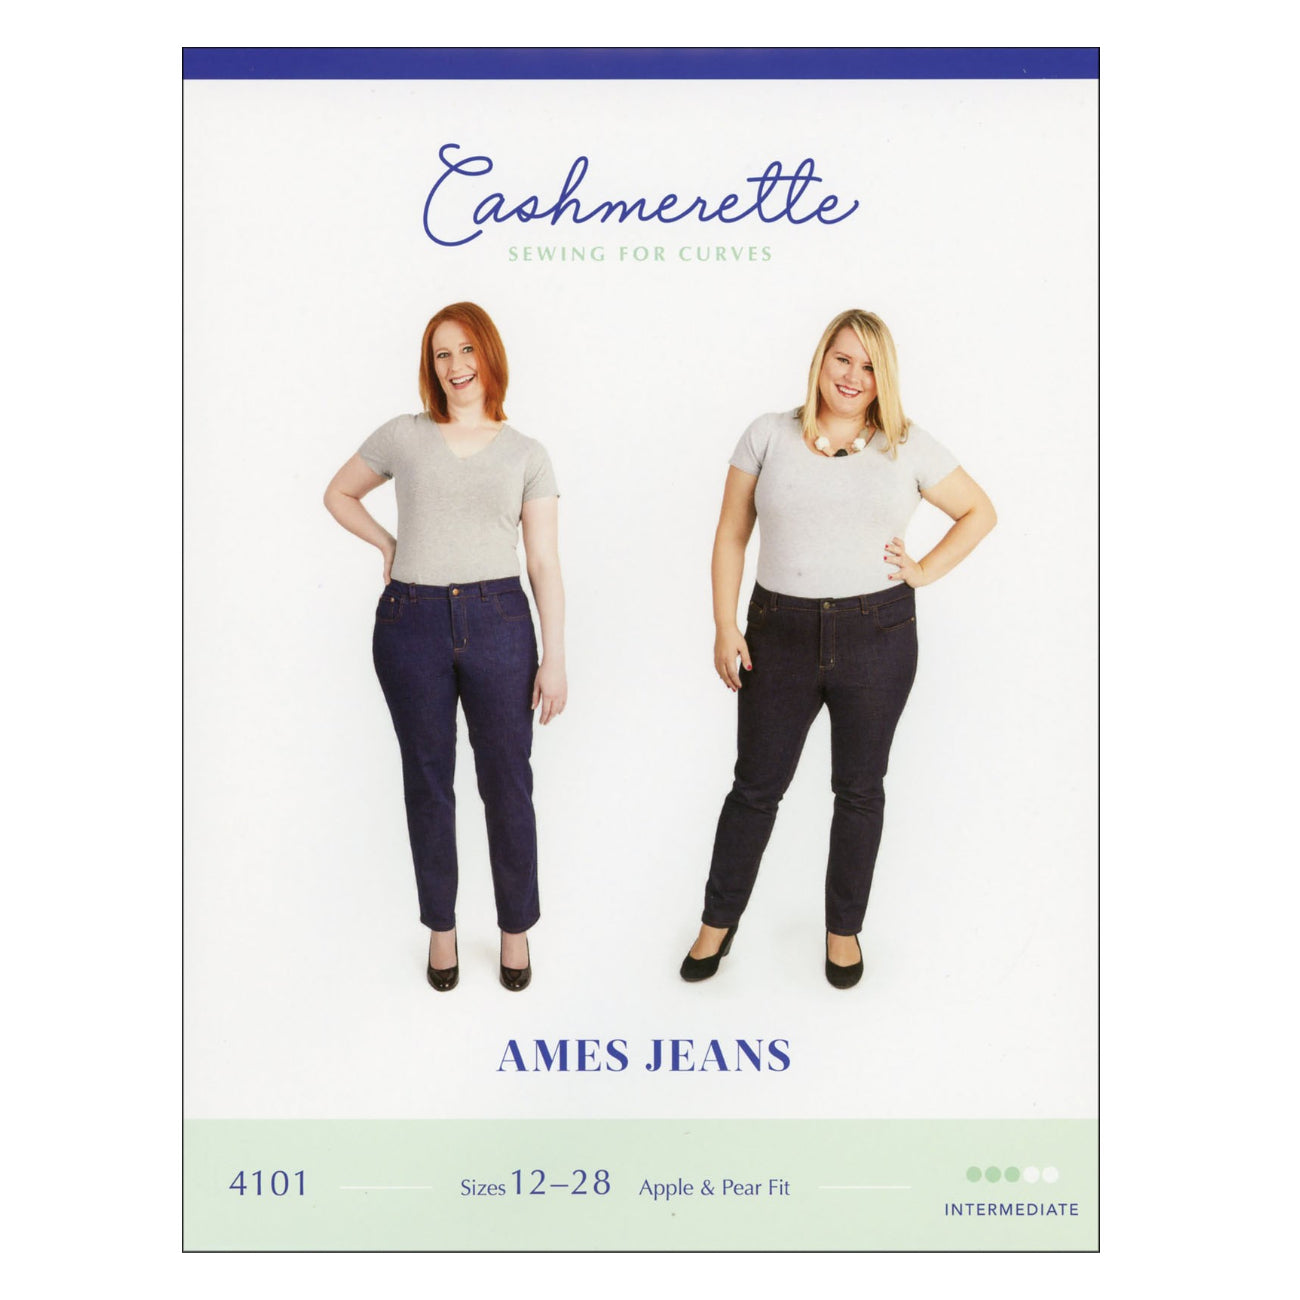 Ames Jeans - sizes 12-28  - By Cashmerette